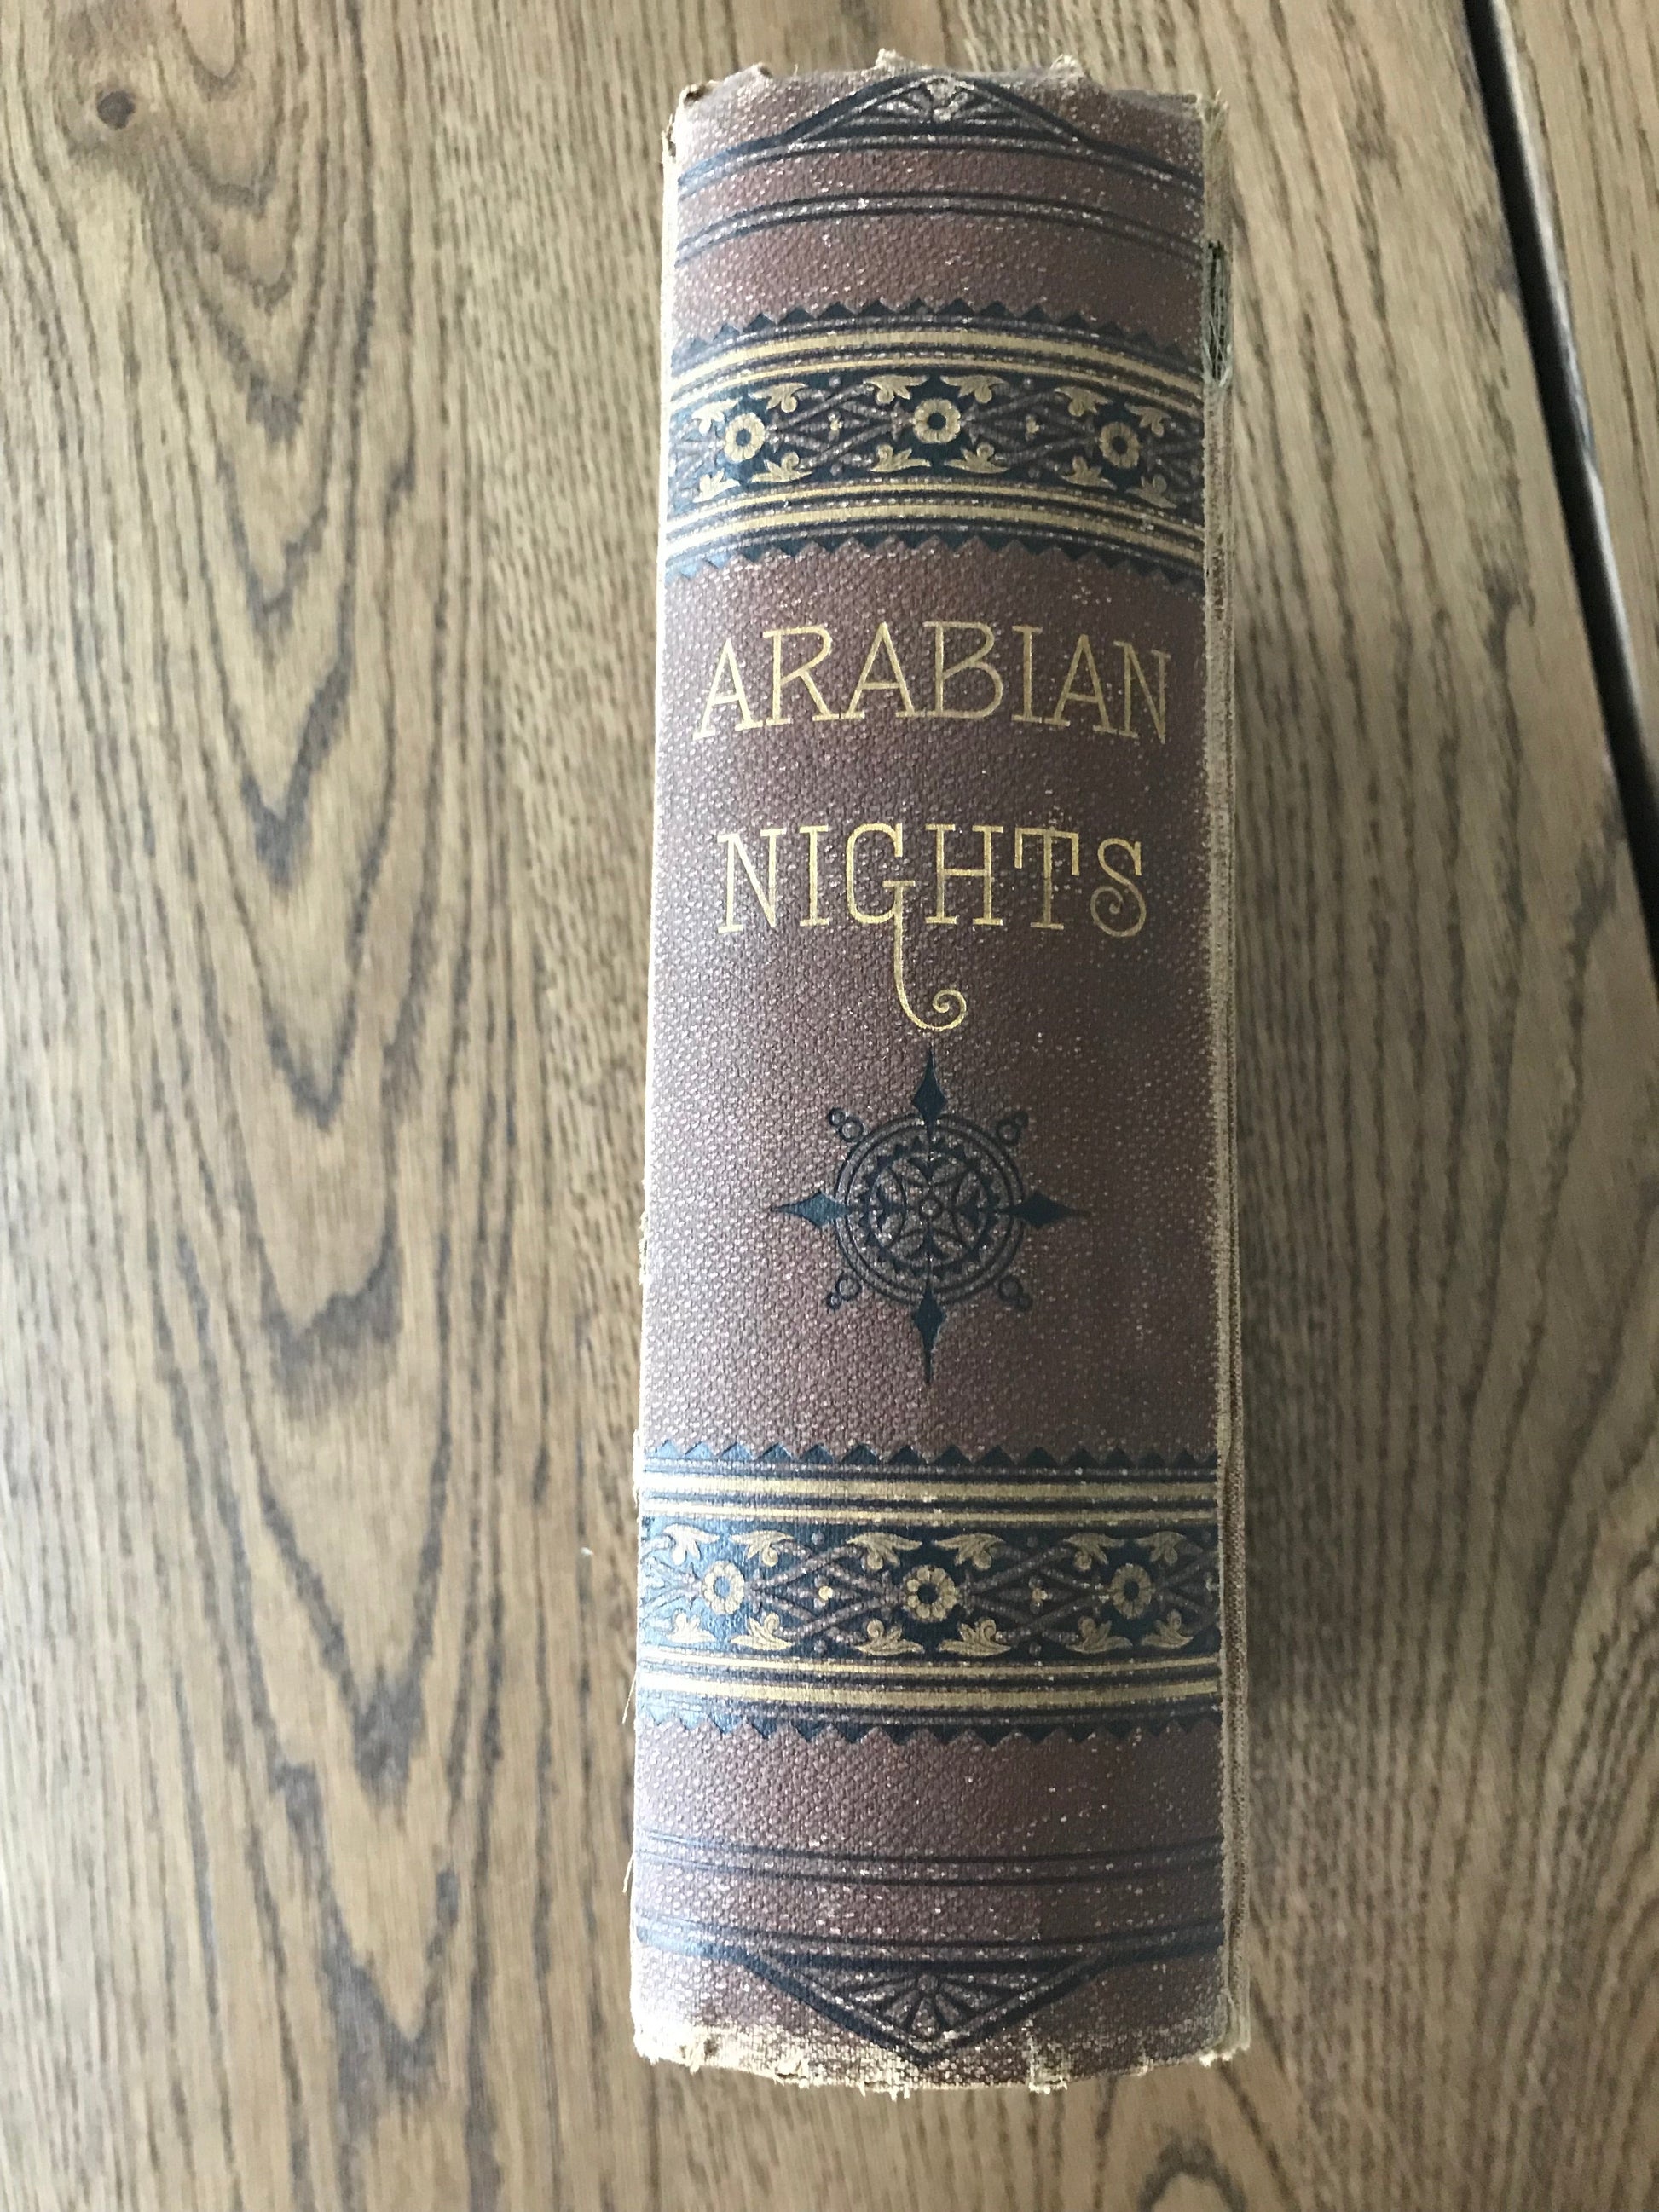 THE ARABIAN KNIGHTS' ENTERTAINMENTS - TRANSLATOR : REV. EDWARD FORSTER BooksCardsNBikes